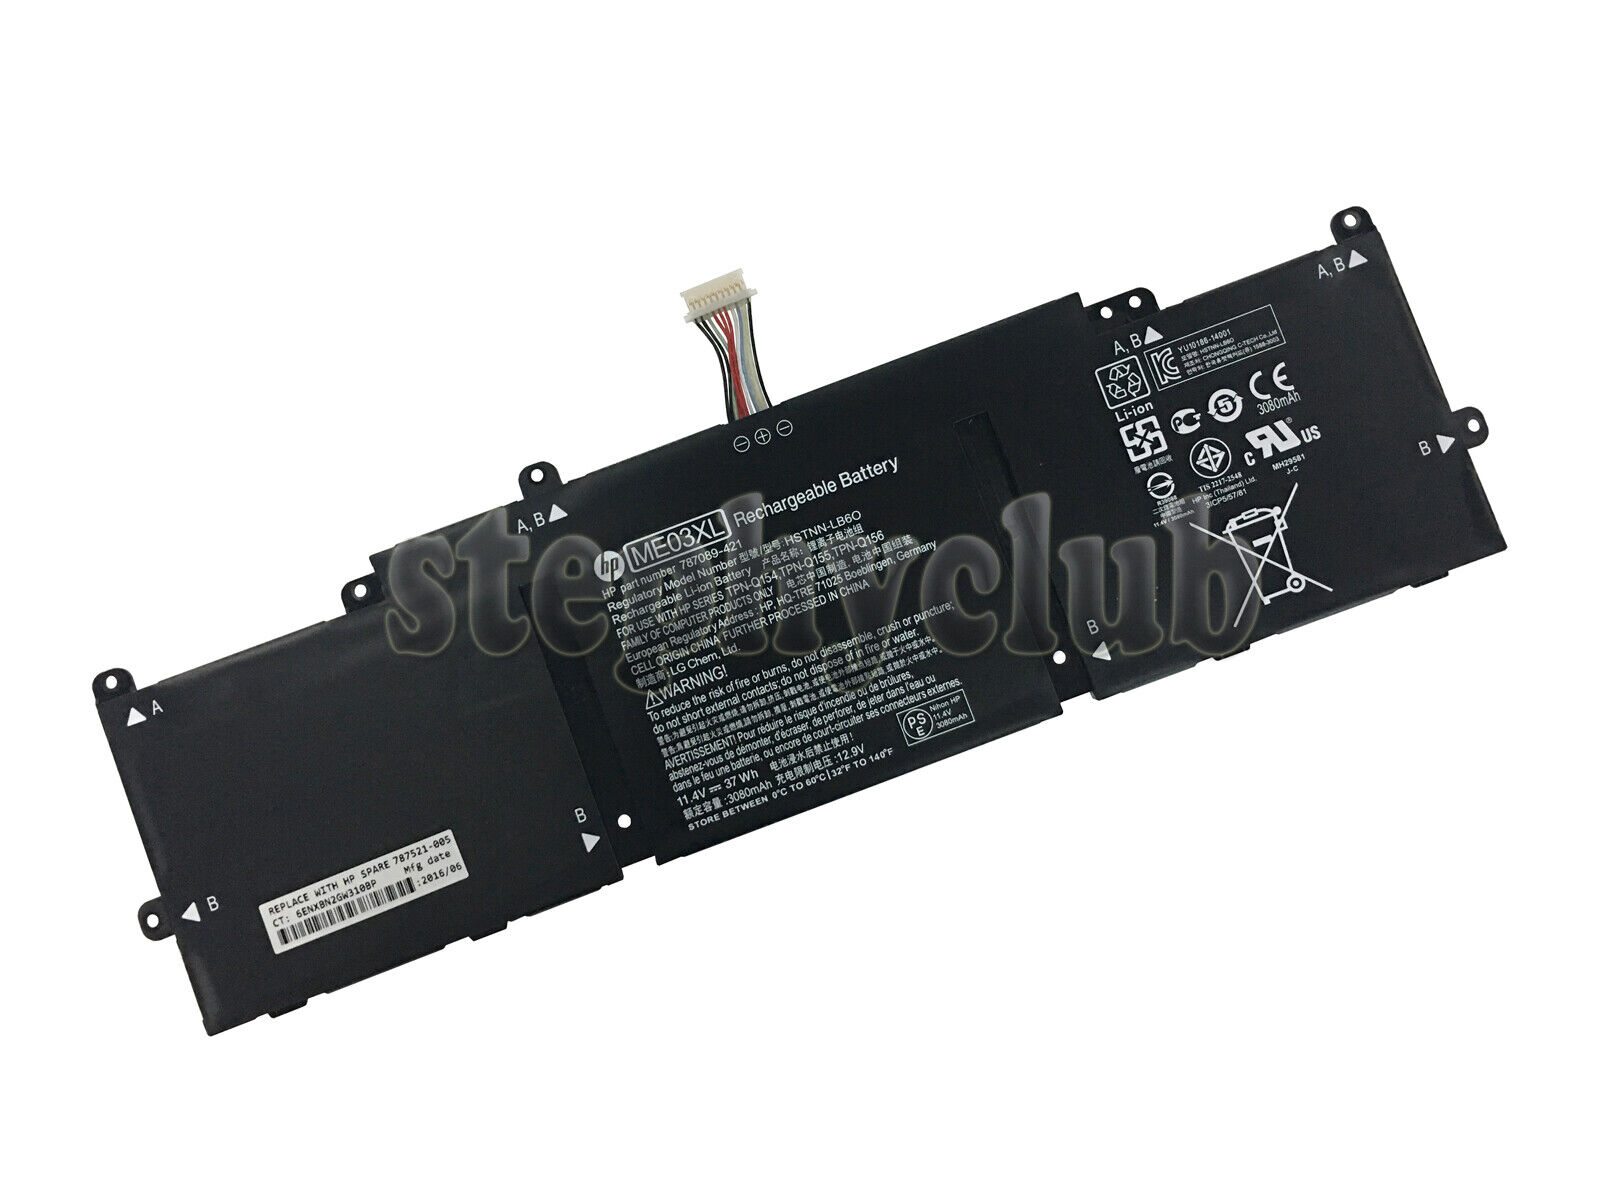 Genuine ME03XL Battery for HP Stream 11 13-C010NR Notebook 787521-005 HSTNN-UB6M